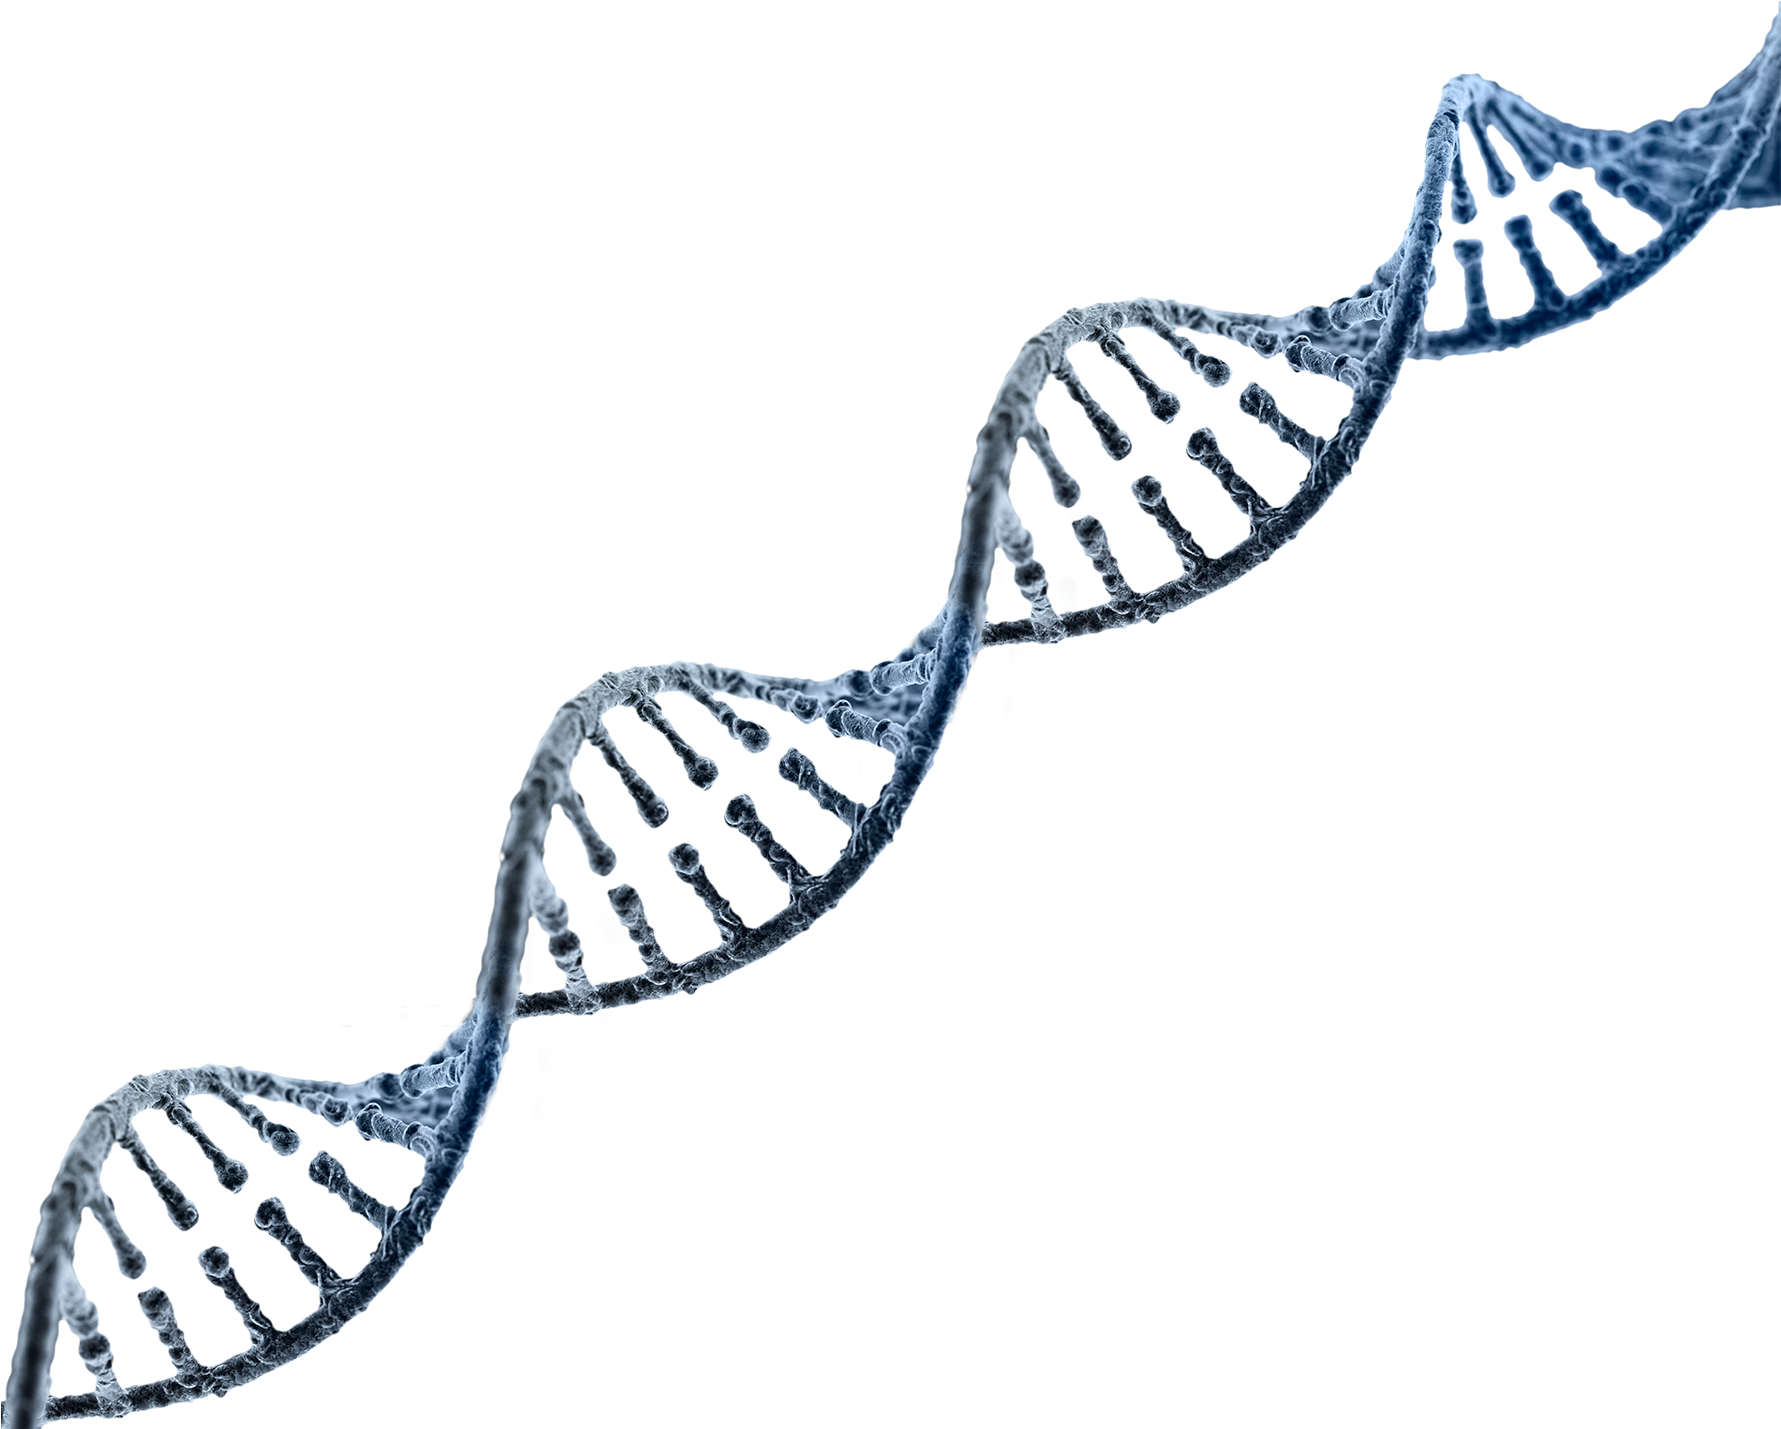 DNA PNG Image